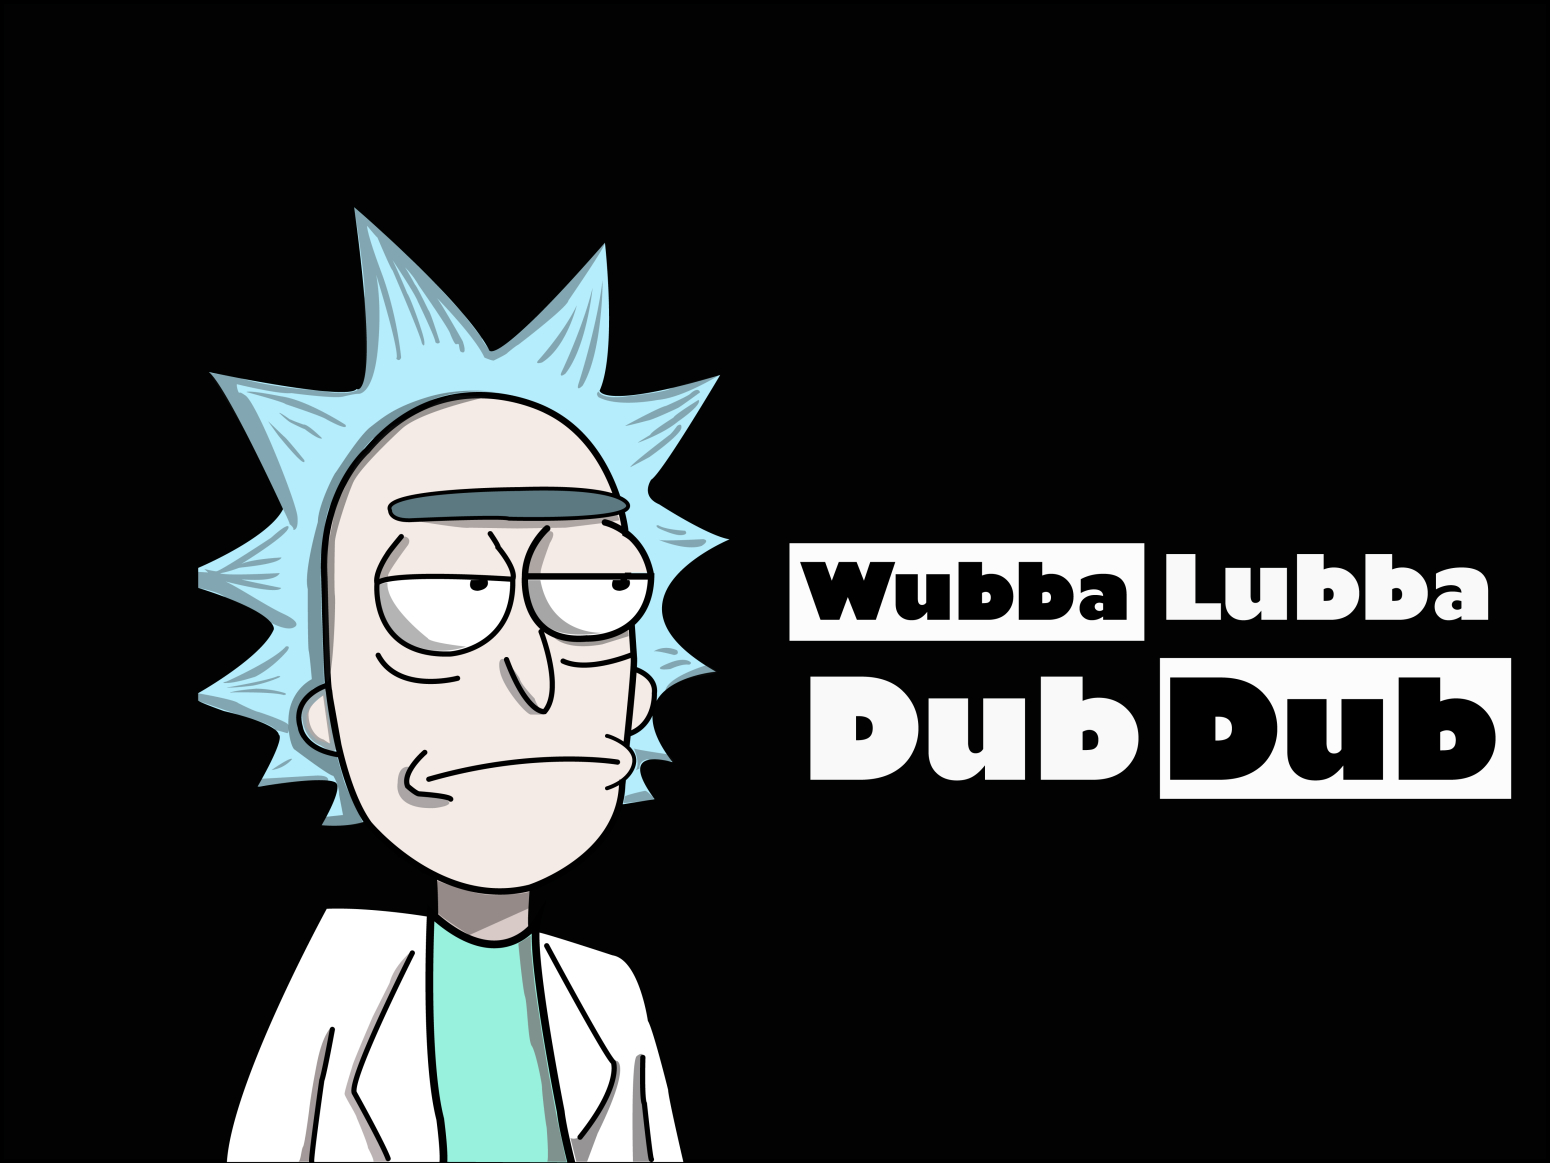 Wubba Lubba DUB DUB.